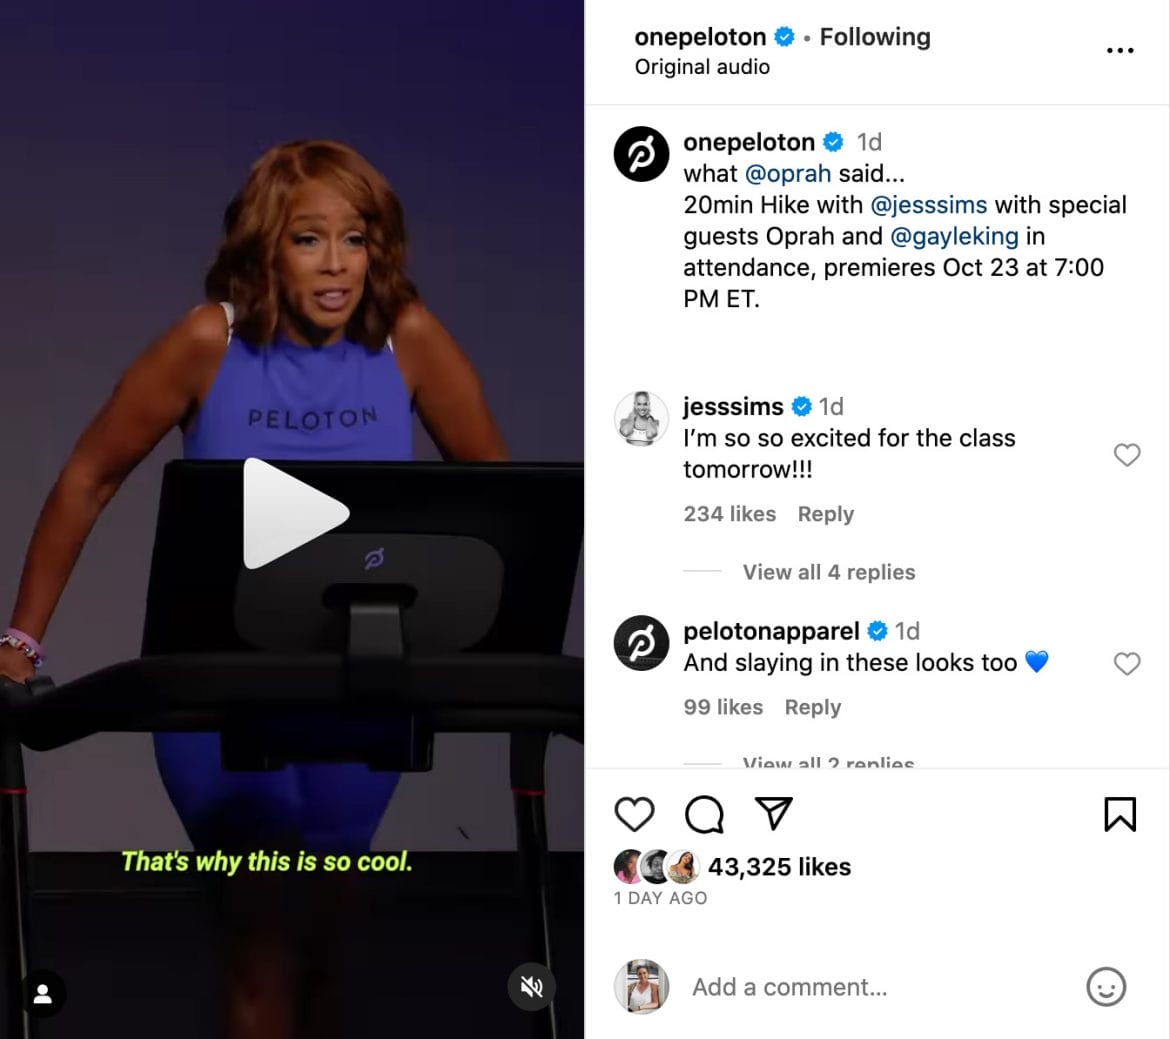 Peloton Instagram post teasing class with Oprah Winfrey & Gayle King.